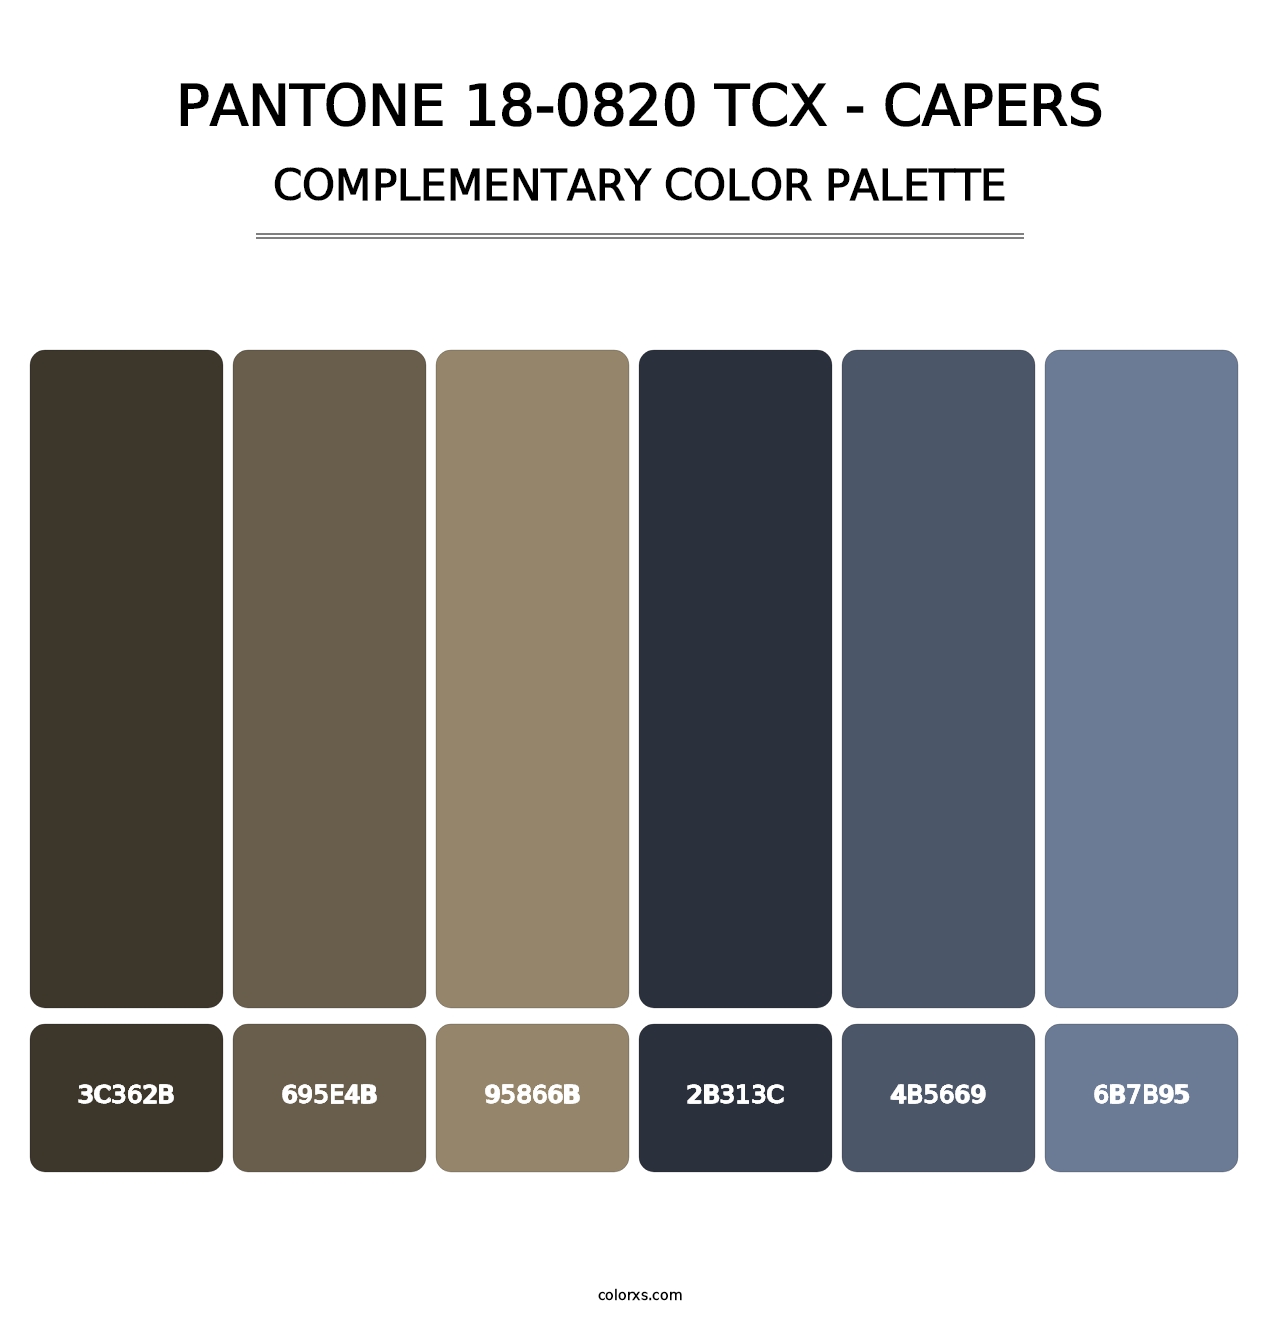 PANTONE 18-0820 TCX - Capers - Complementary Color Palette